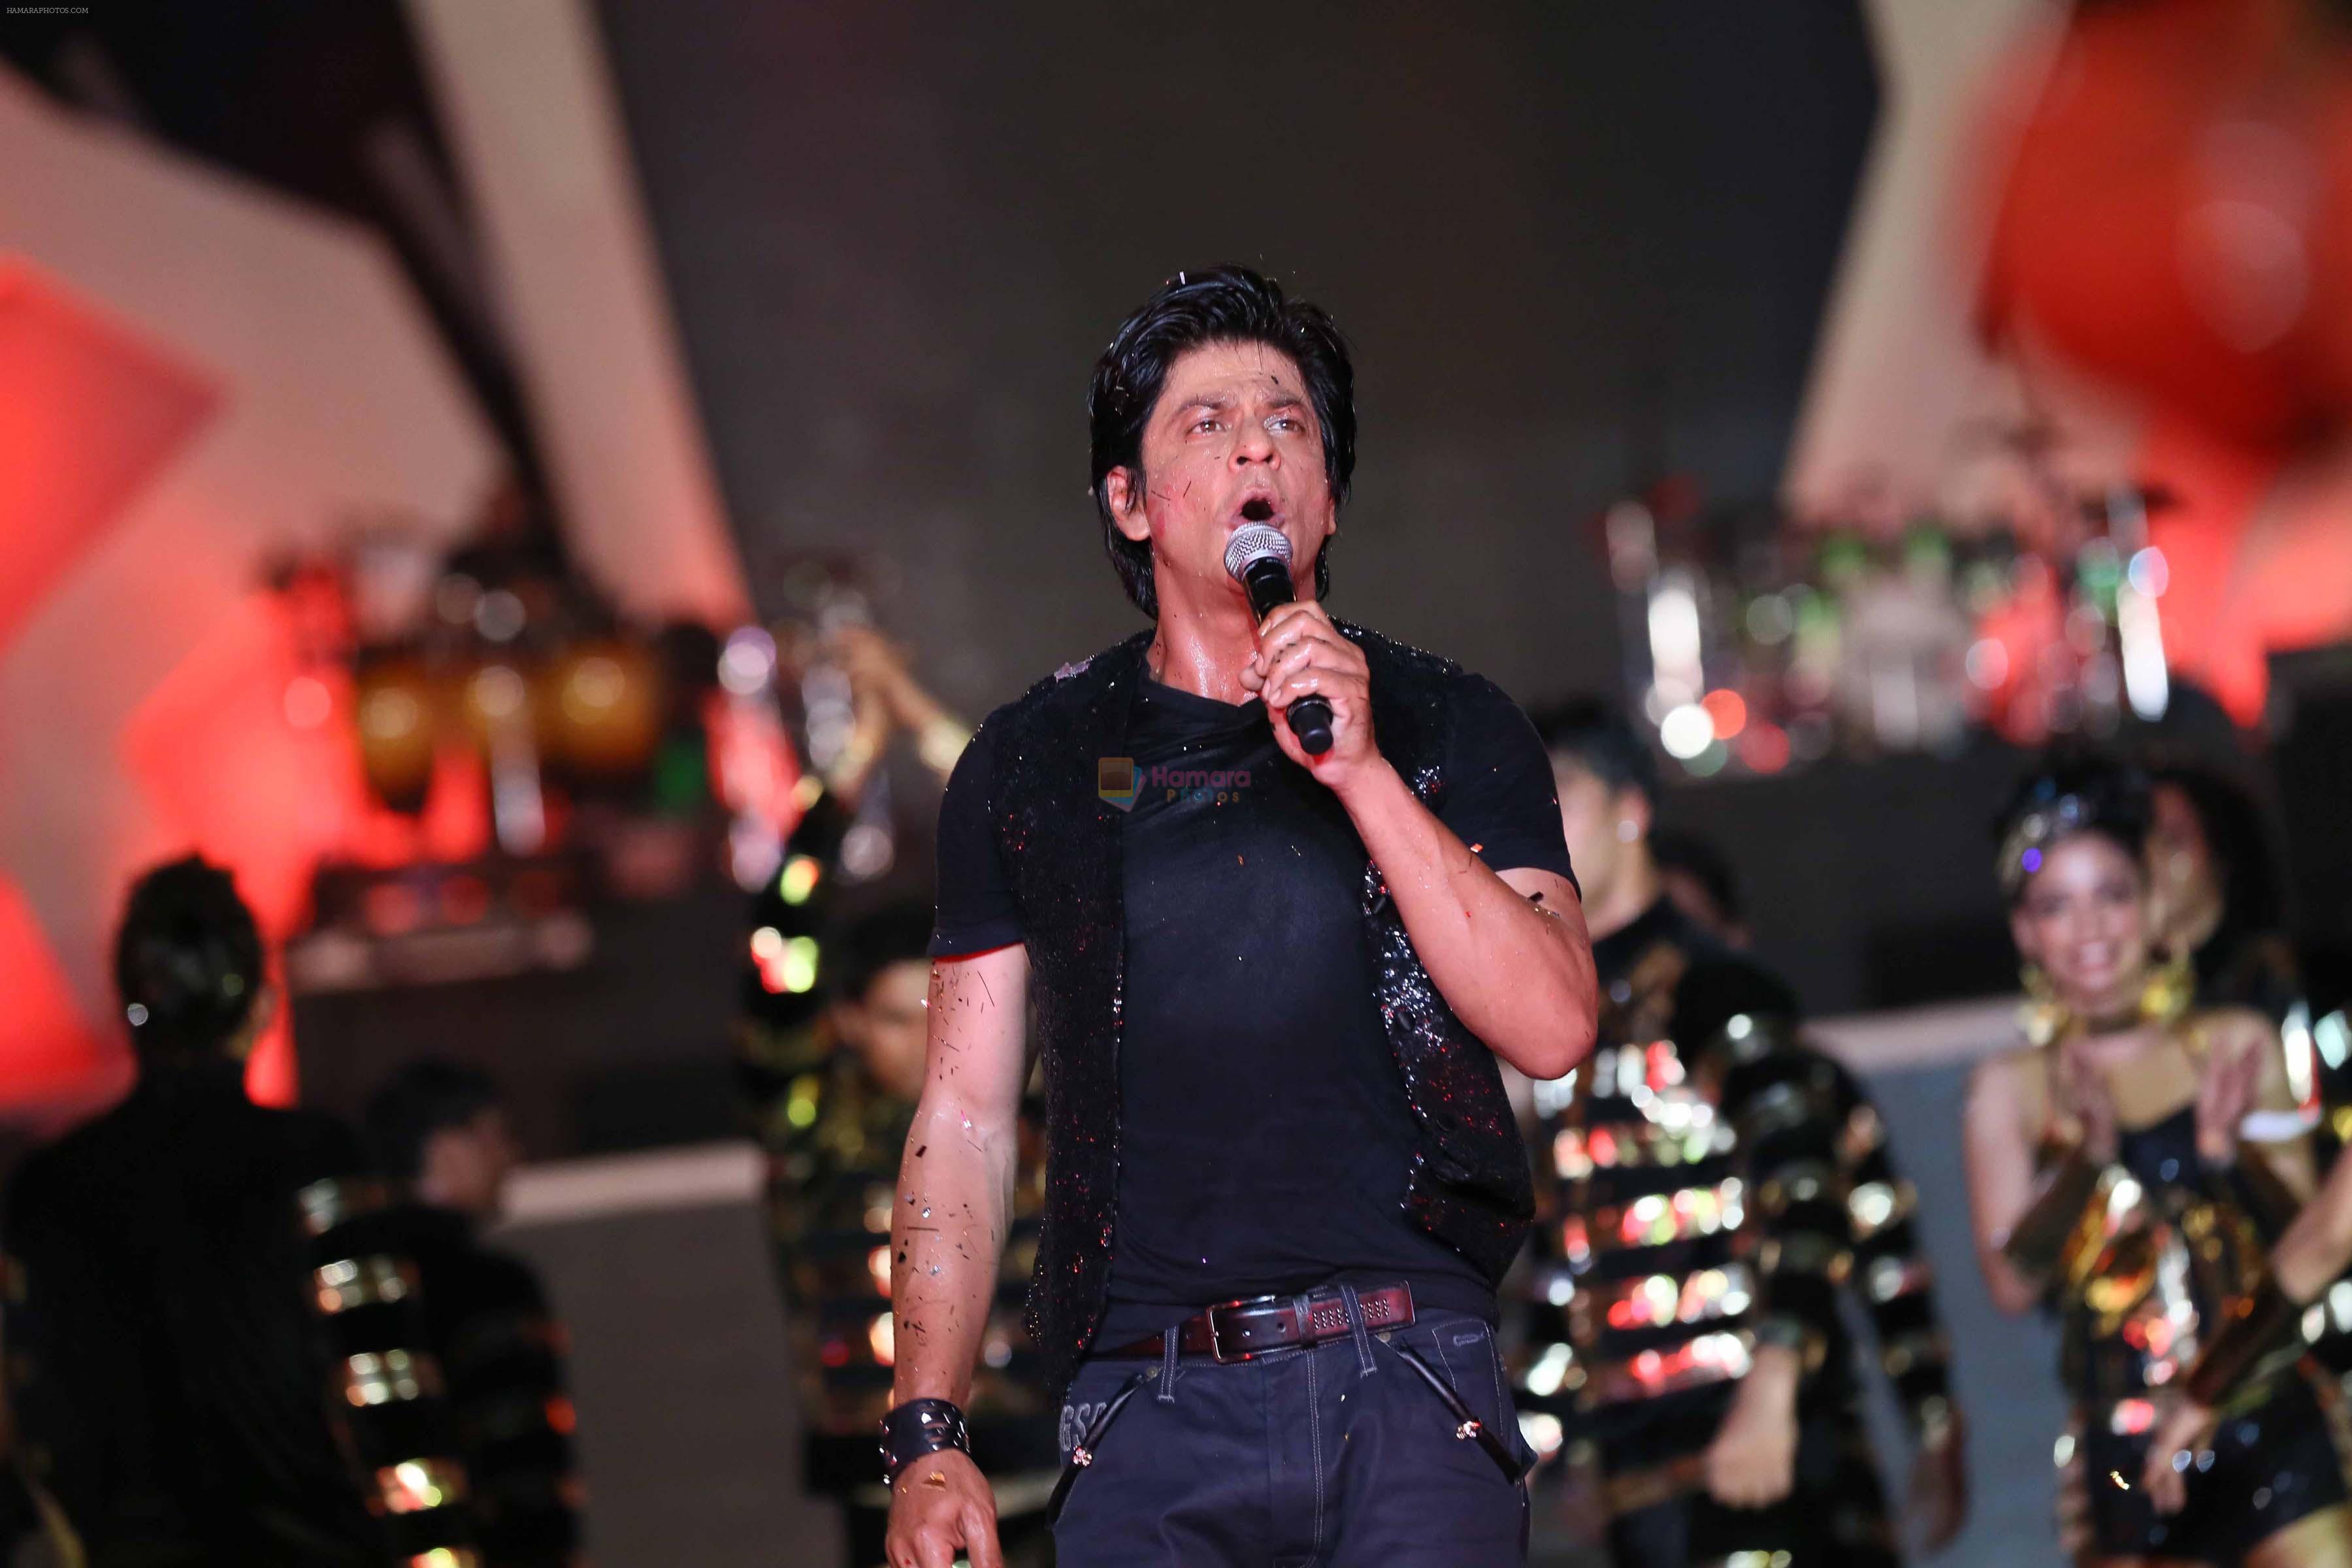 Shahrukh Khan at IPL 6 opening ceremony in Kolkata on 2nd April 2012